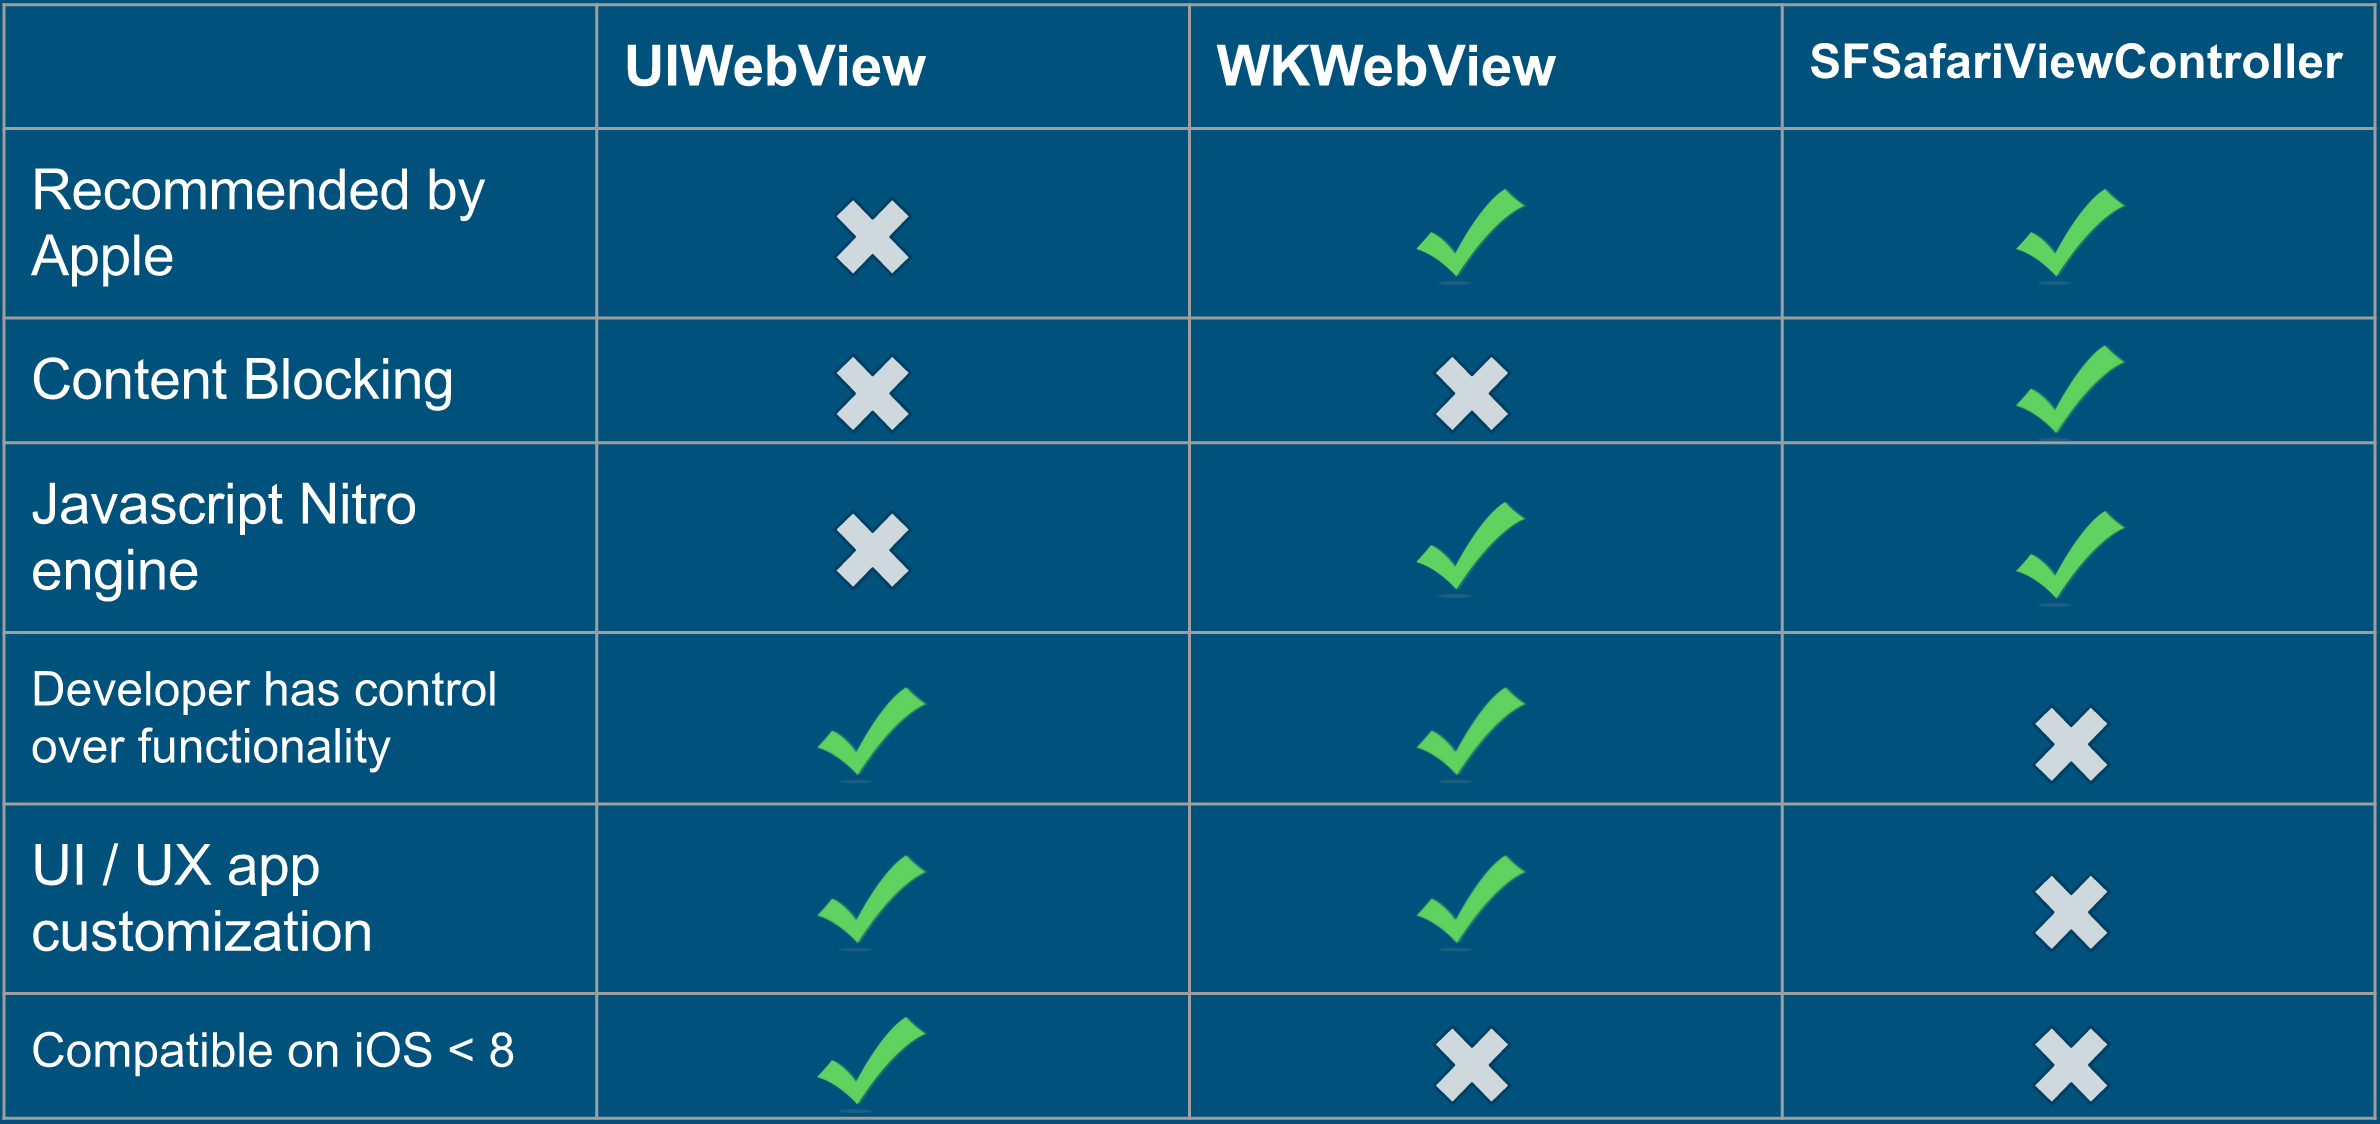 wkwebview-controller